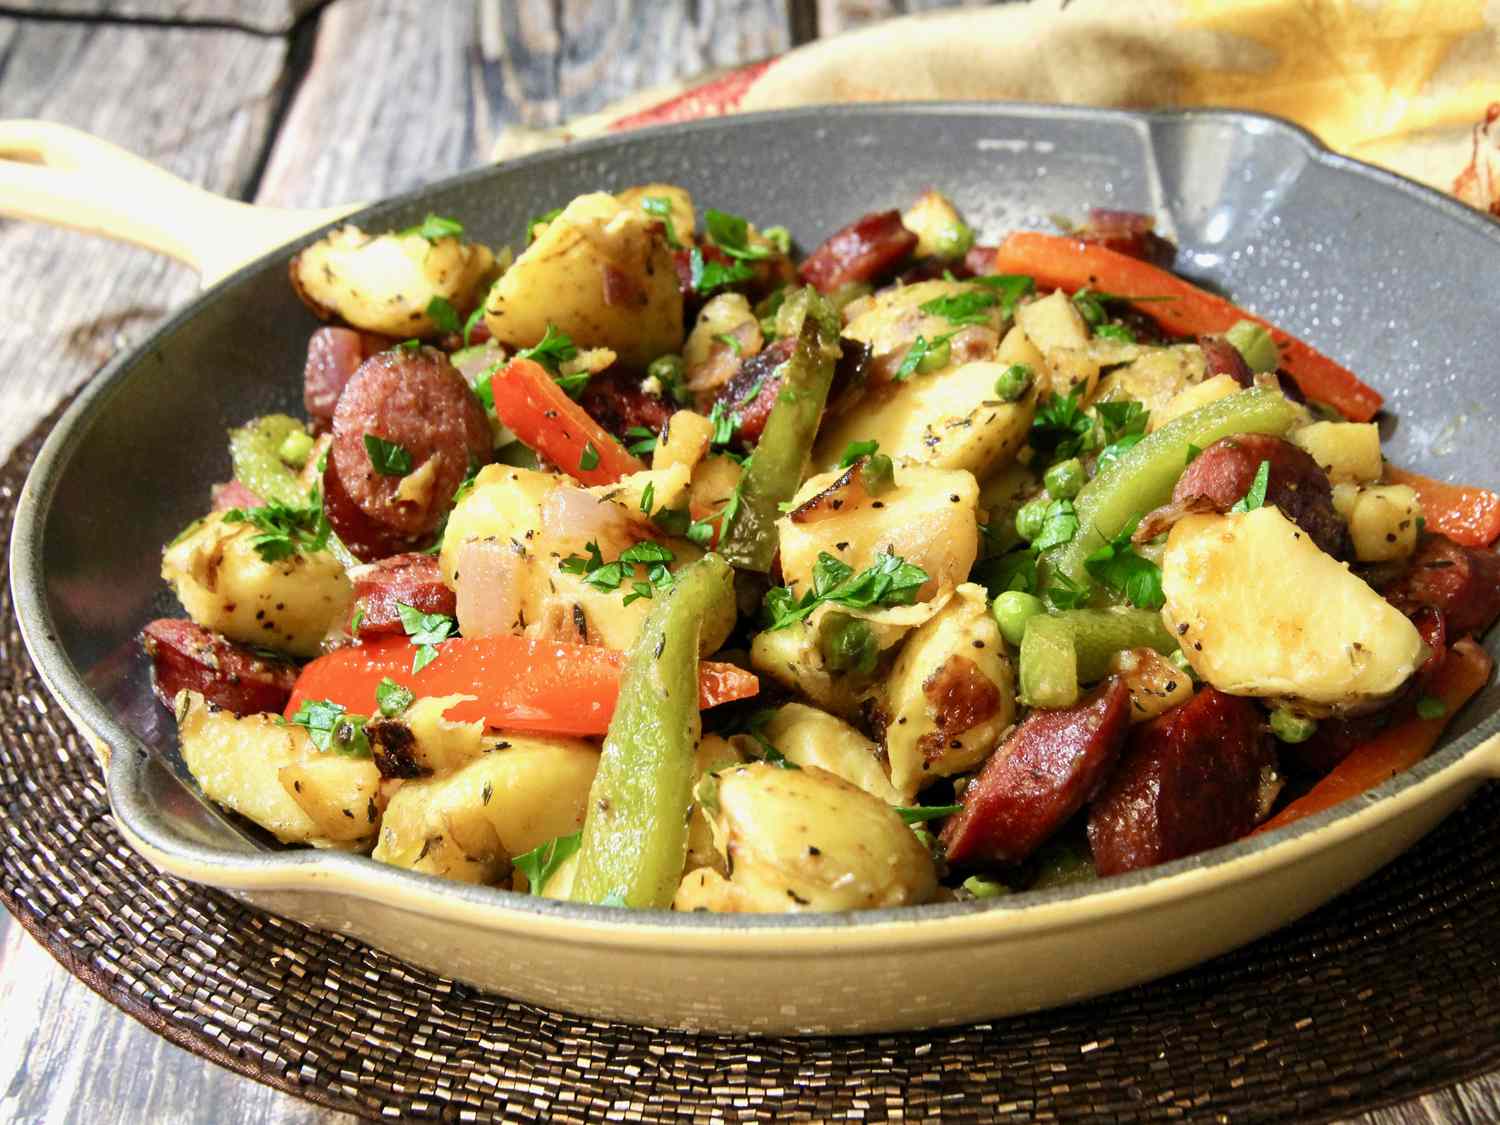 Skillet potatoes, sausage, and vegetables